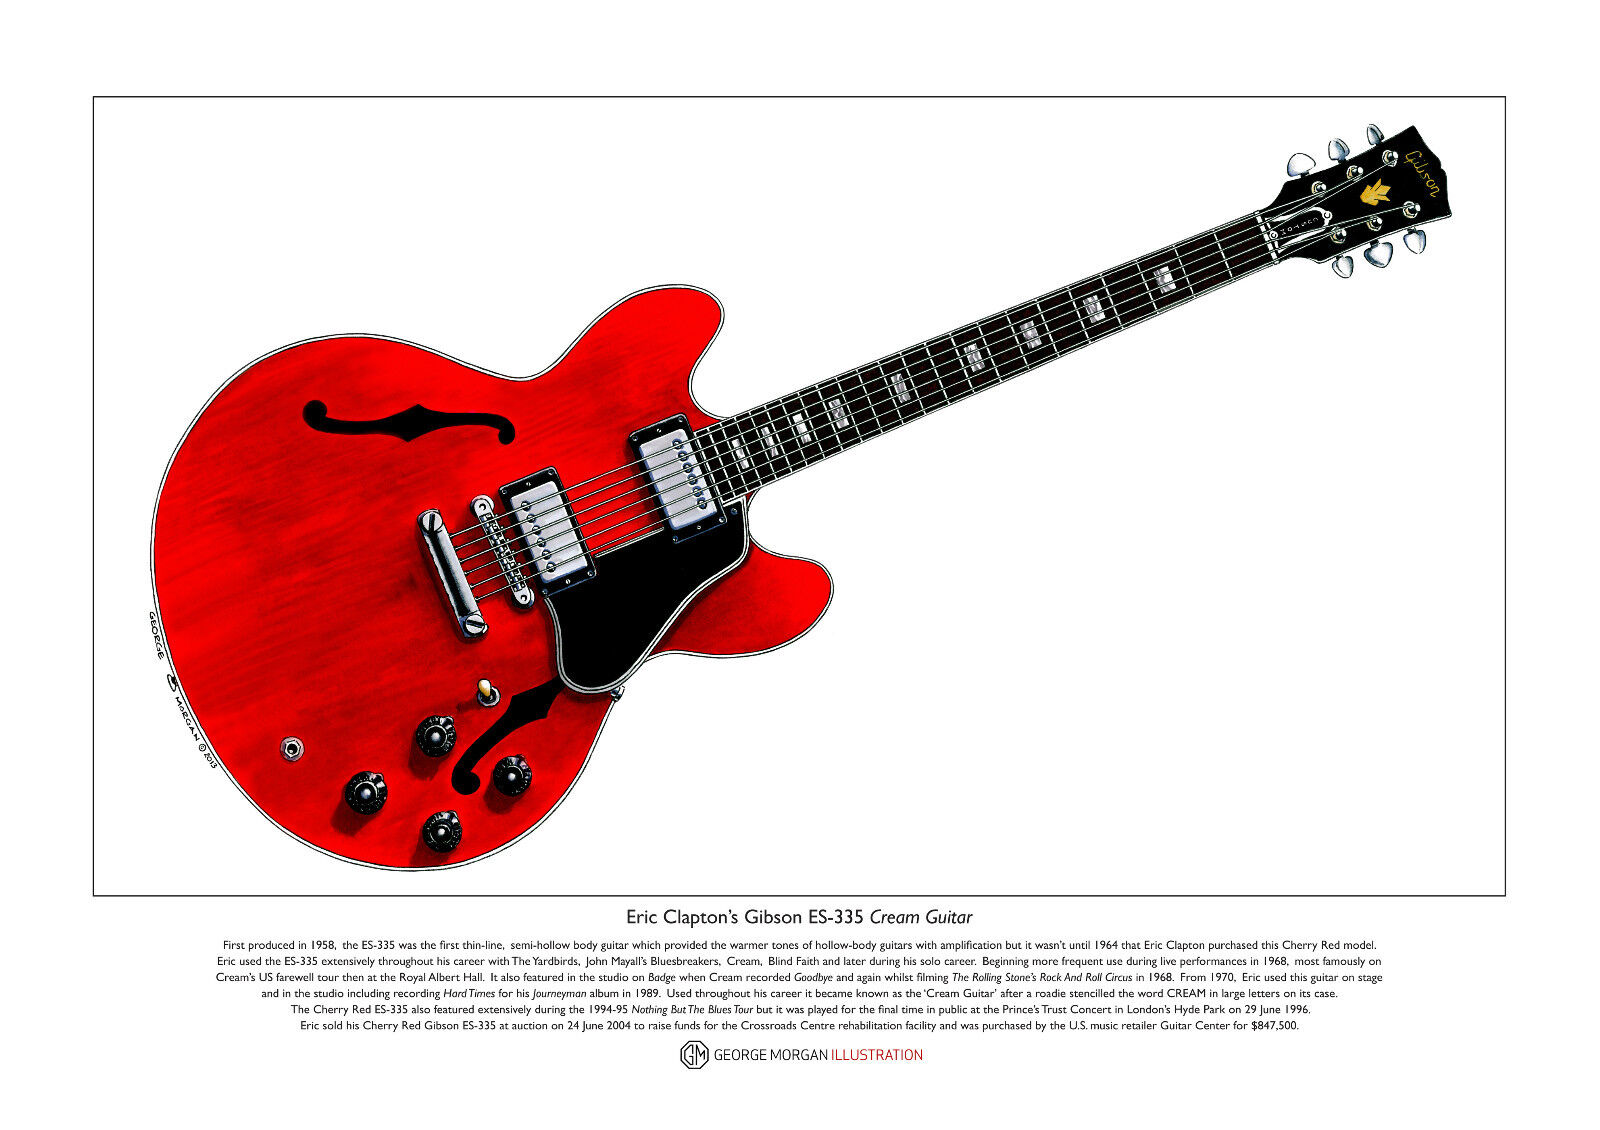 Eric Clapton’s Gibson ES-335 Cream Guitar Limited Edition Fine Art Print A3 size